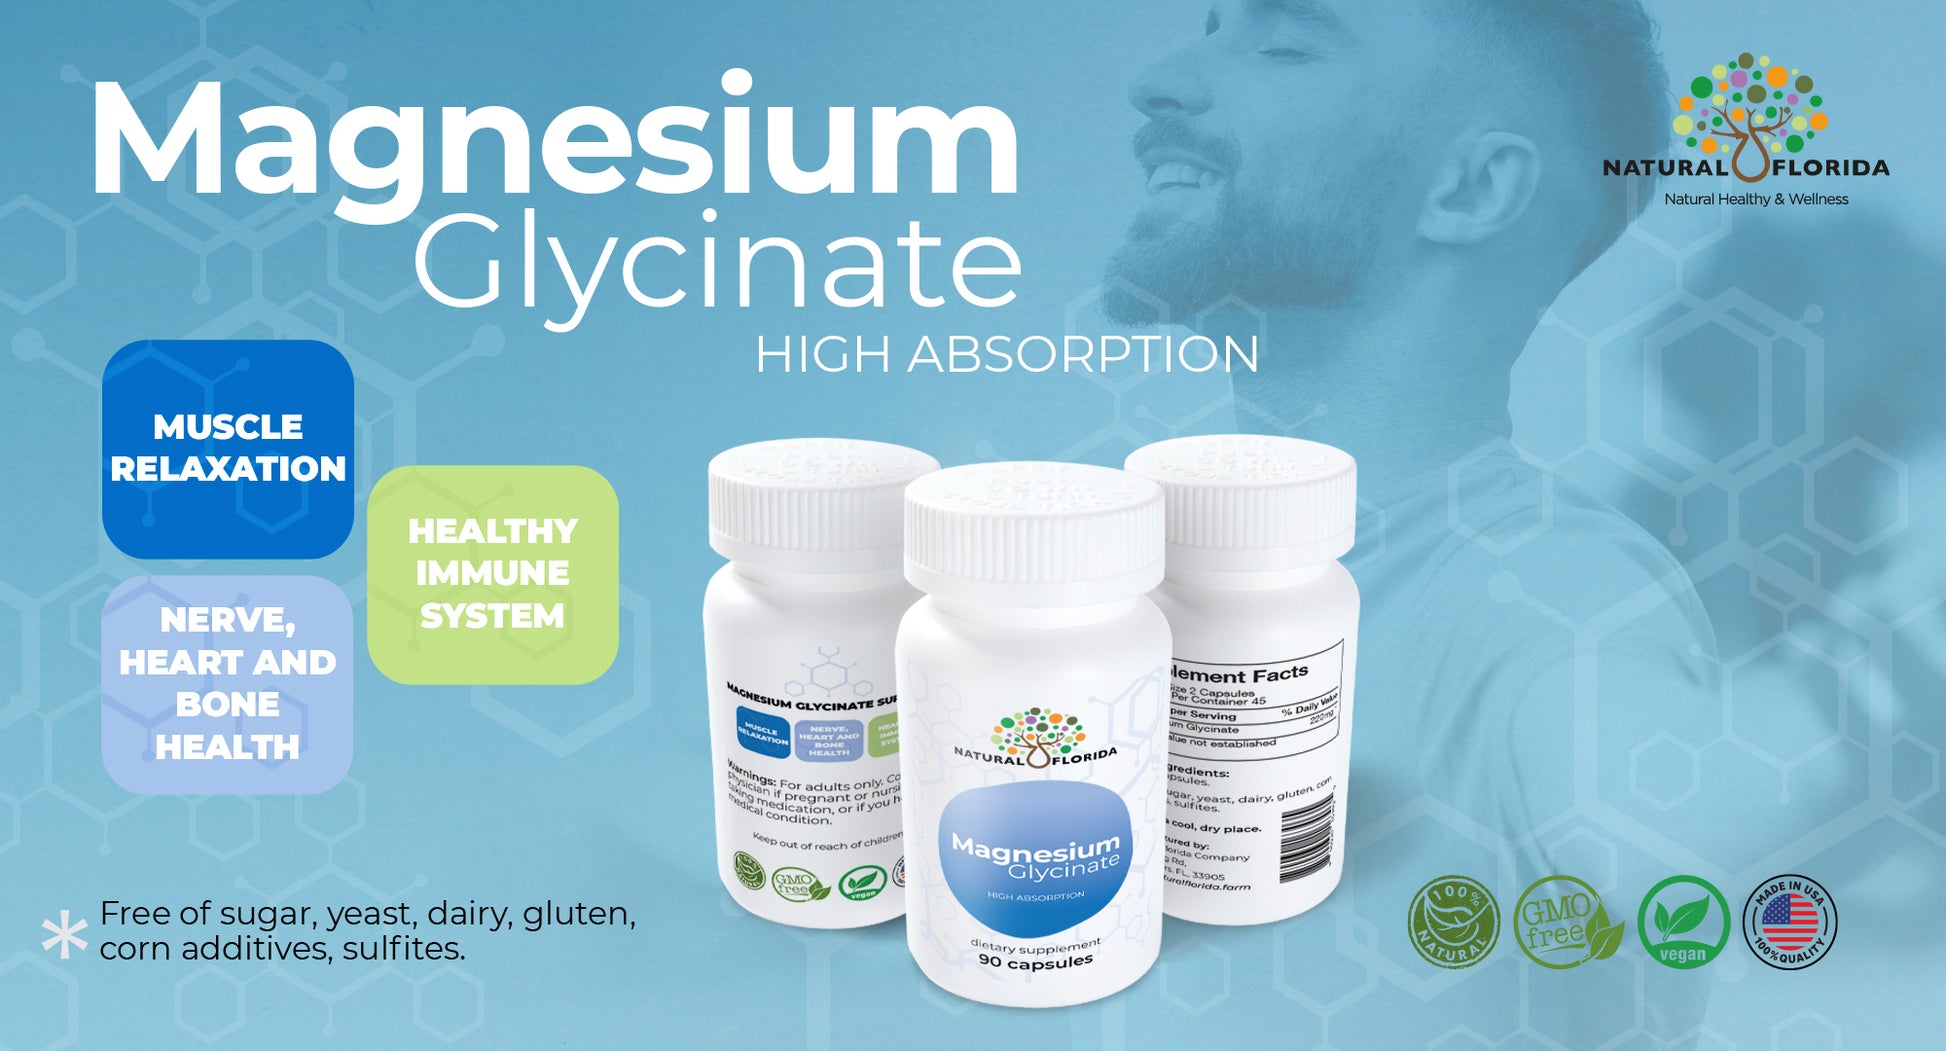 Magnesium Glycinate benefits